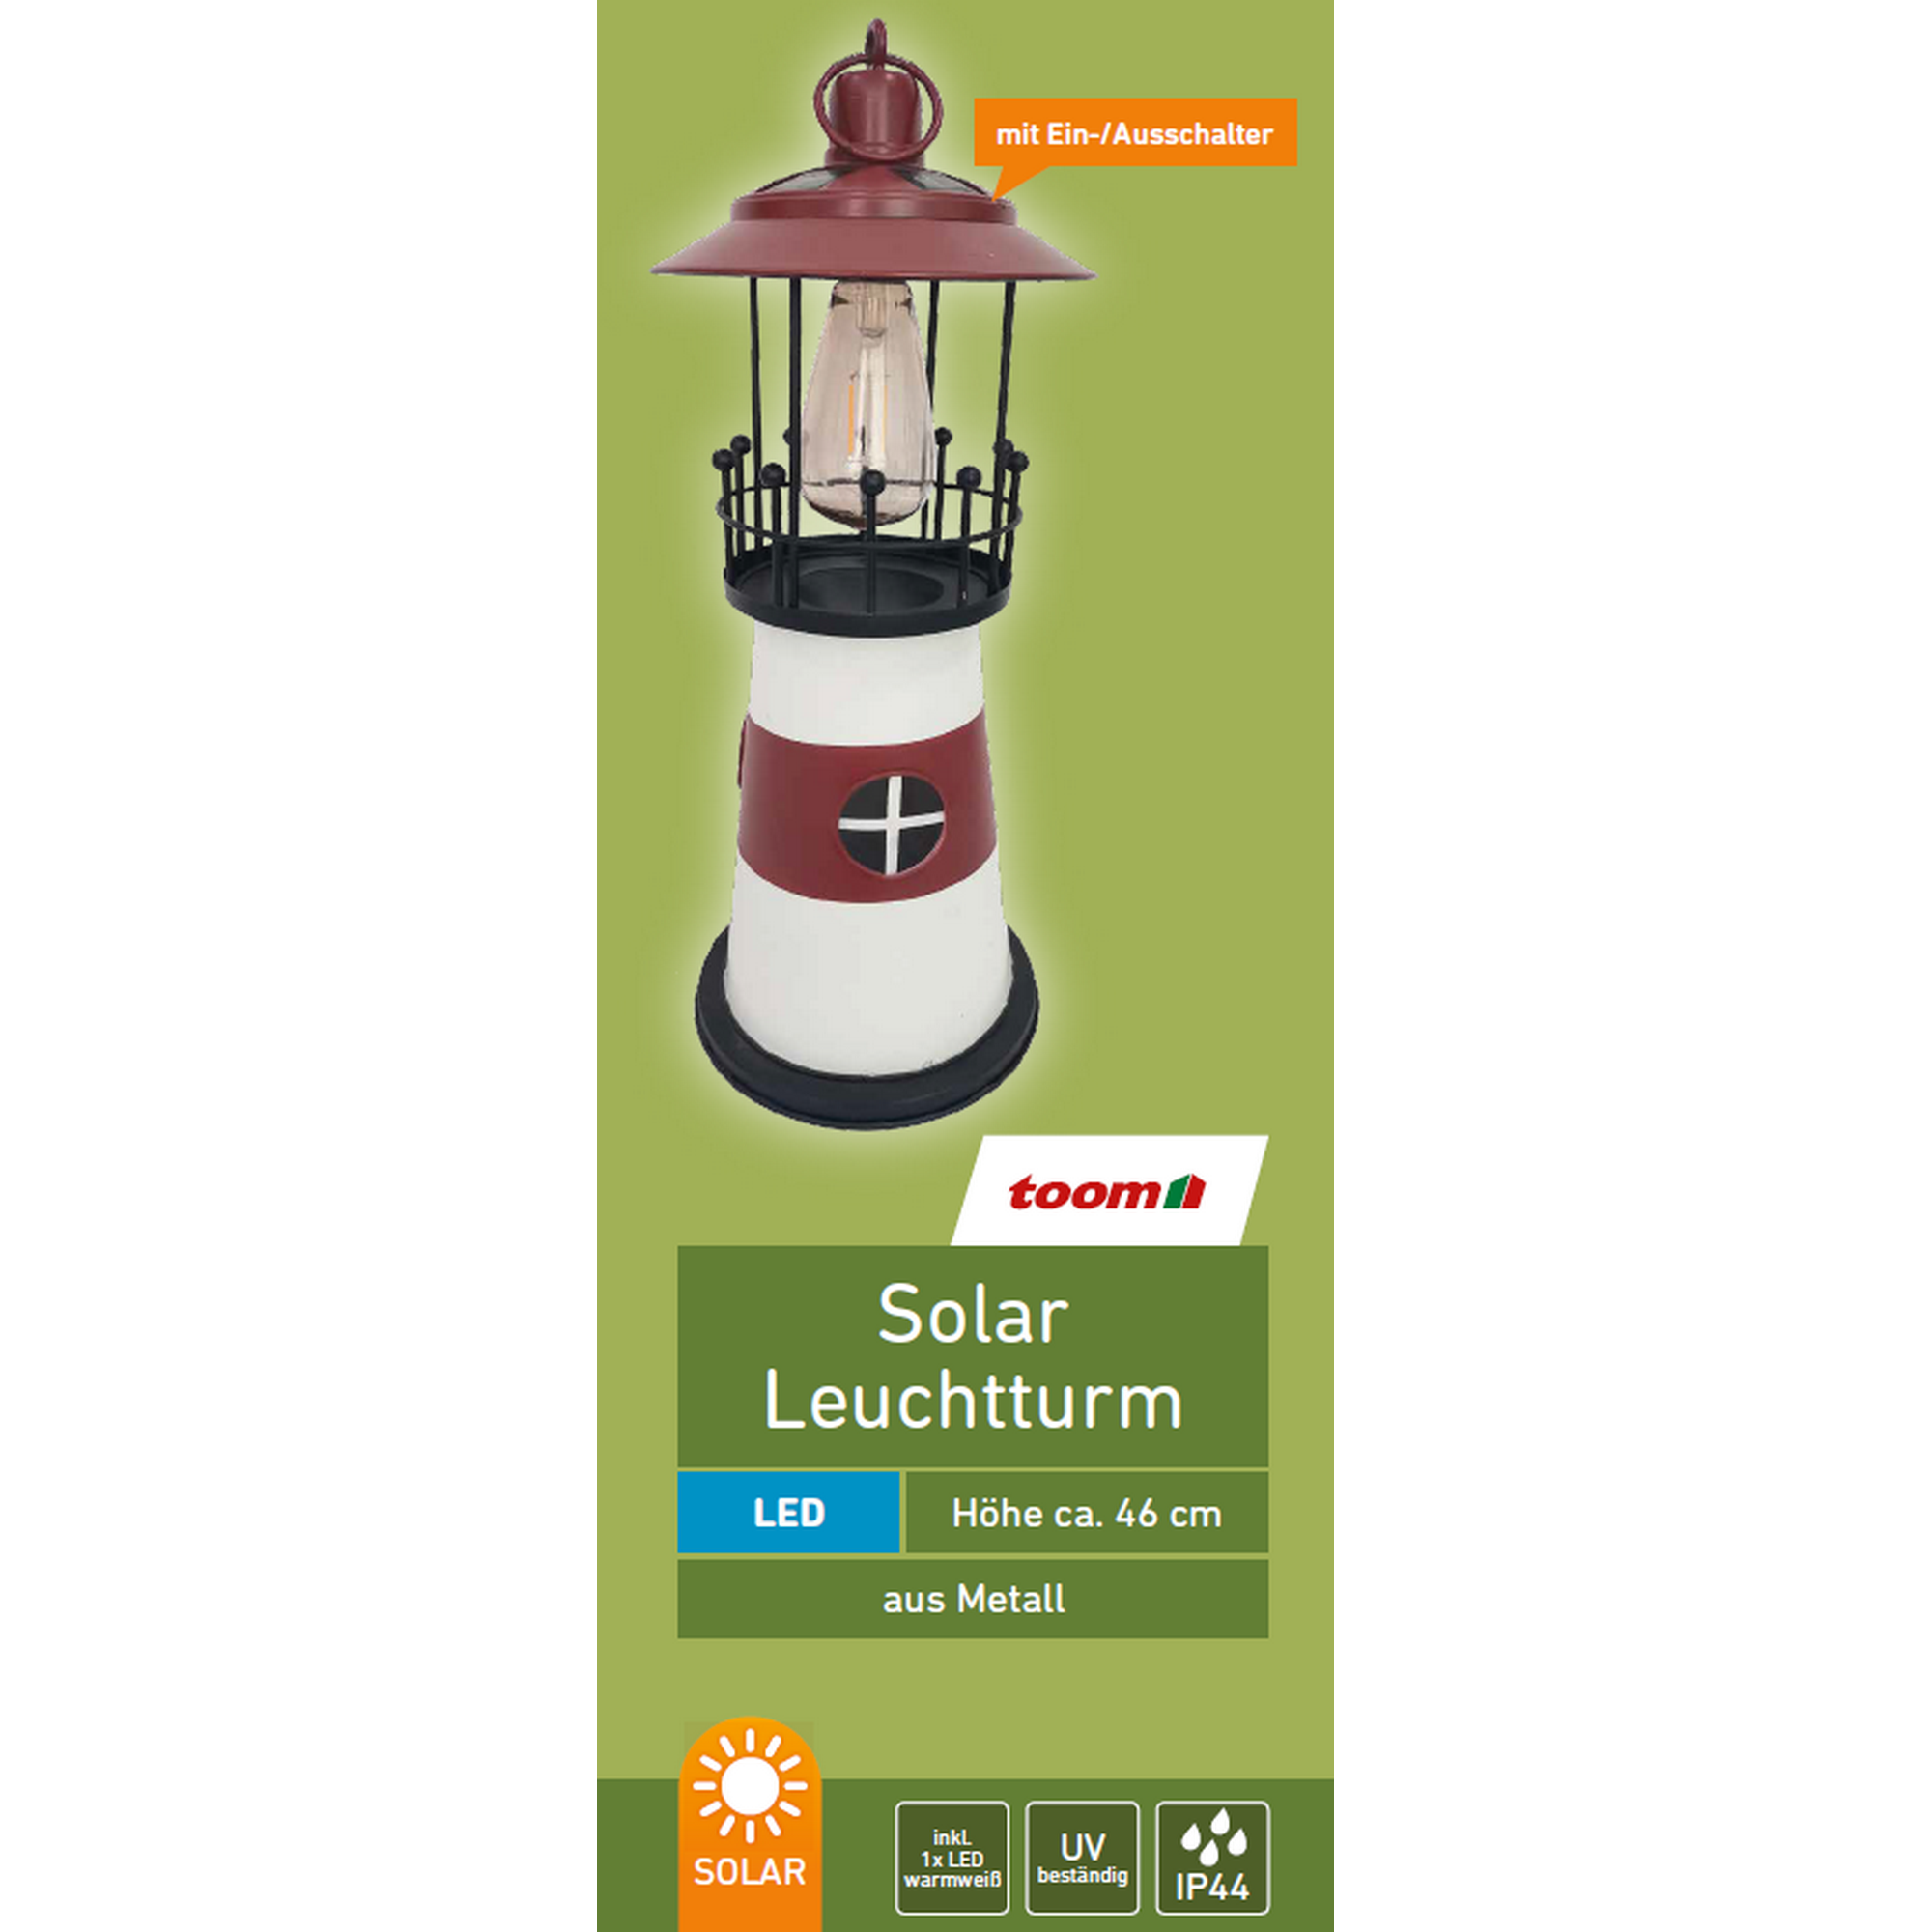 Solar-Dekoleuchte 'Leuchtturm' weiß/rot 18 x 46 cm + product picture